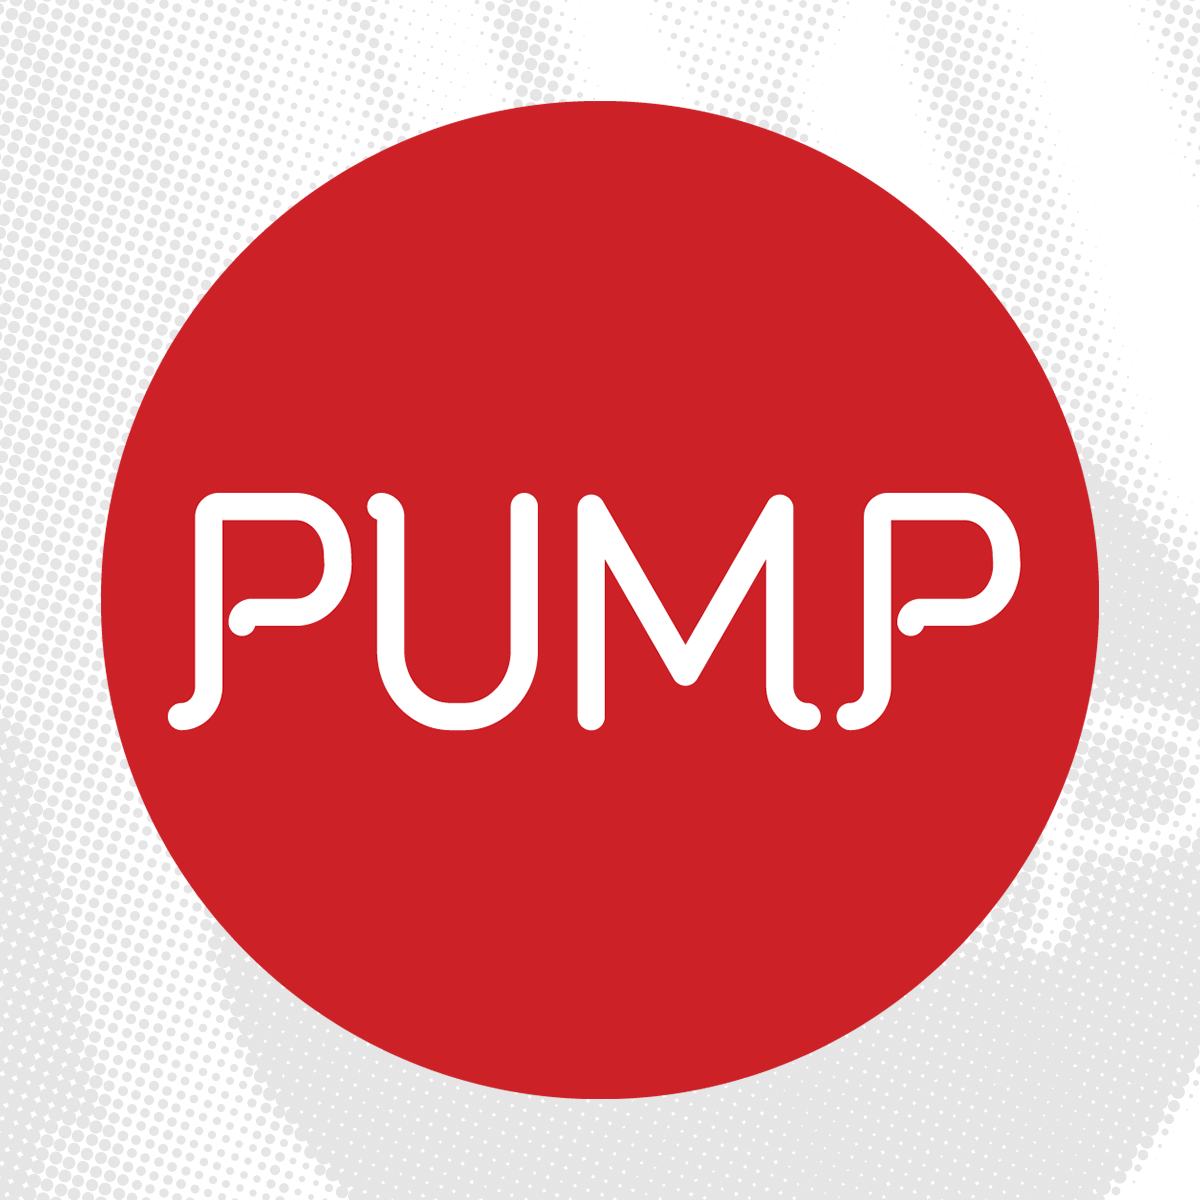 Pump Logo - Industry Leading Web Design & Digital Marketing